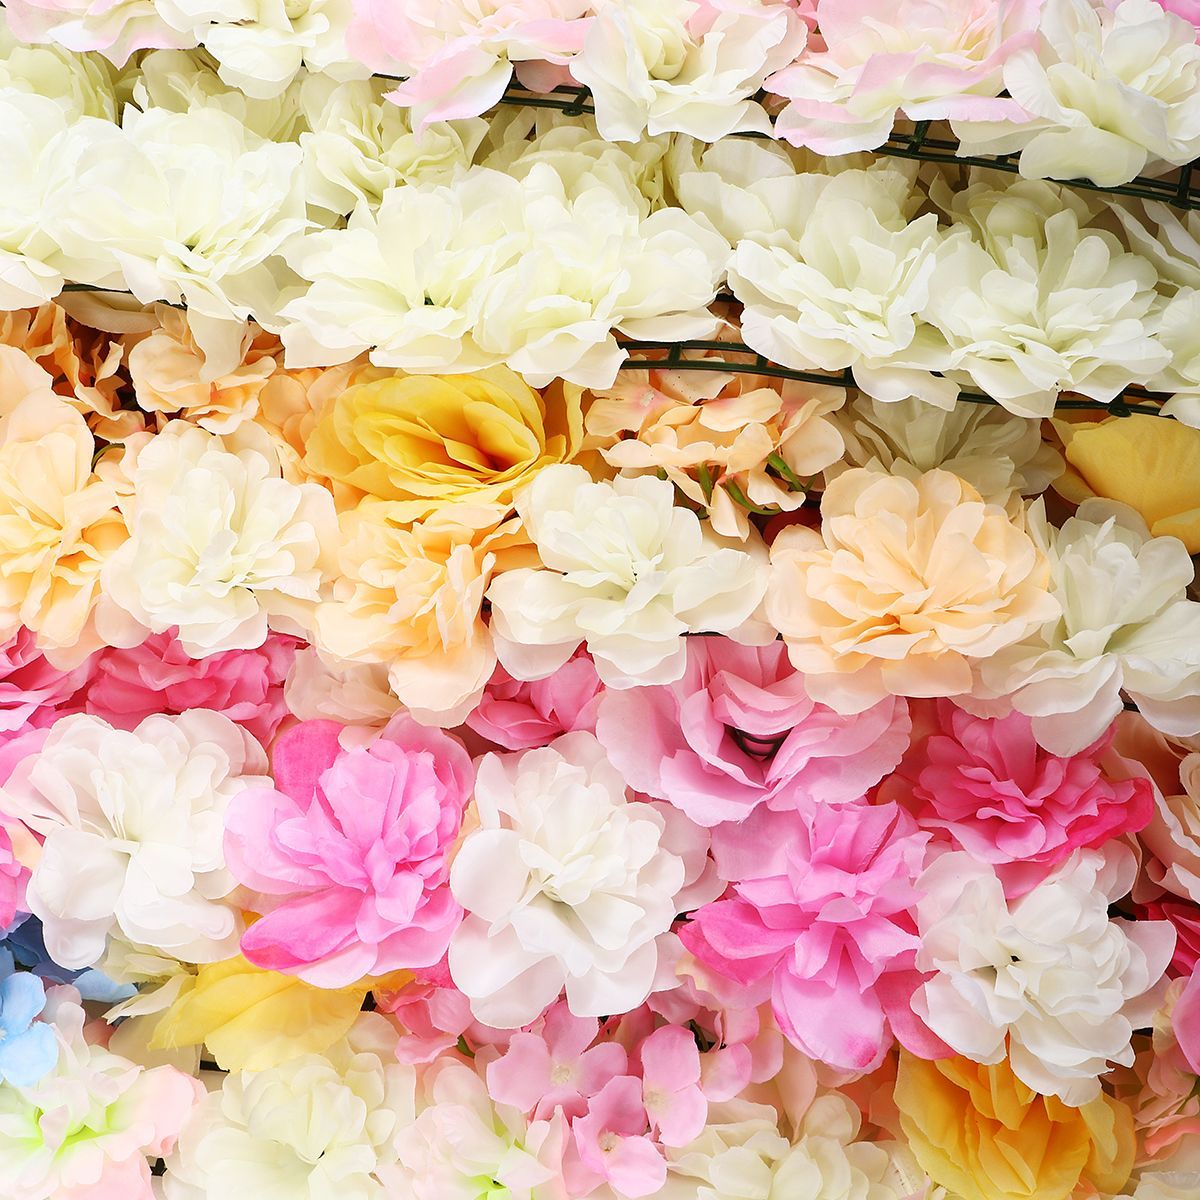 DIY-Artificia-Wedding-Rose-Flower-Panel-Backdrop-Wall-Road-Arch-Decorations-1632758